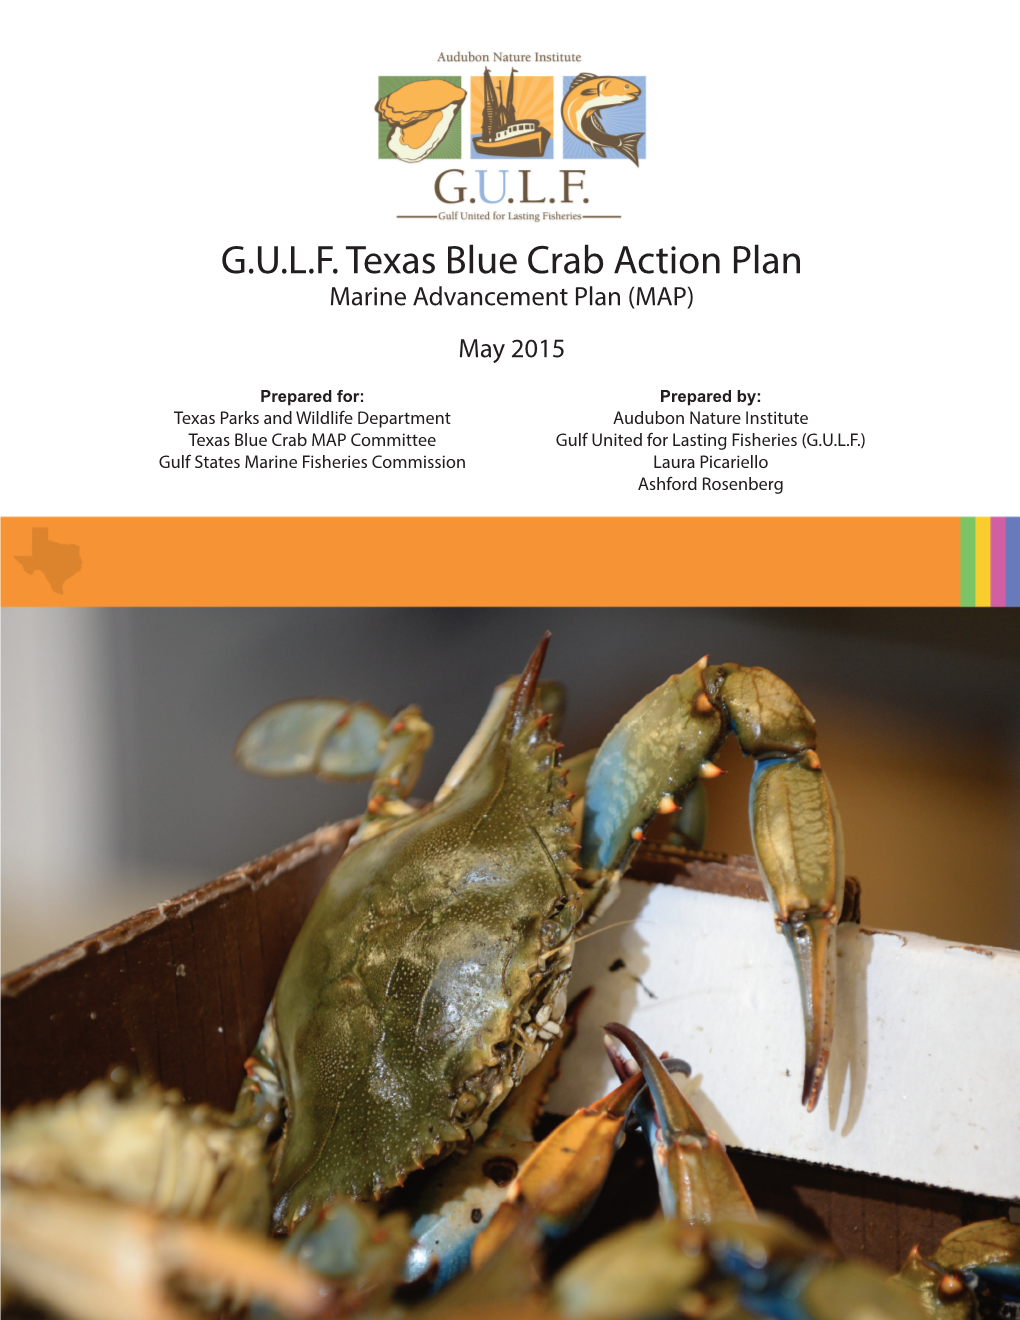 G.U.L.F. Texas Blue Crab Action Plan Marine Advancement Plan (MAP) May 2015